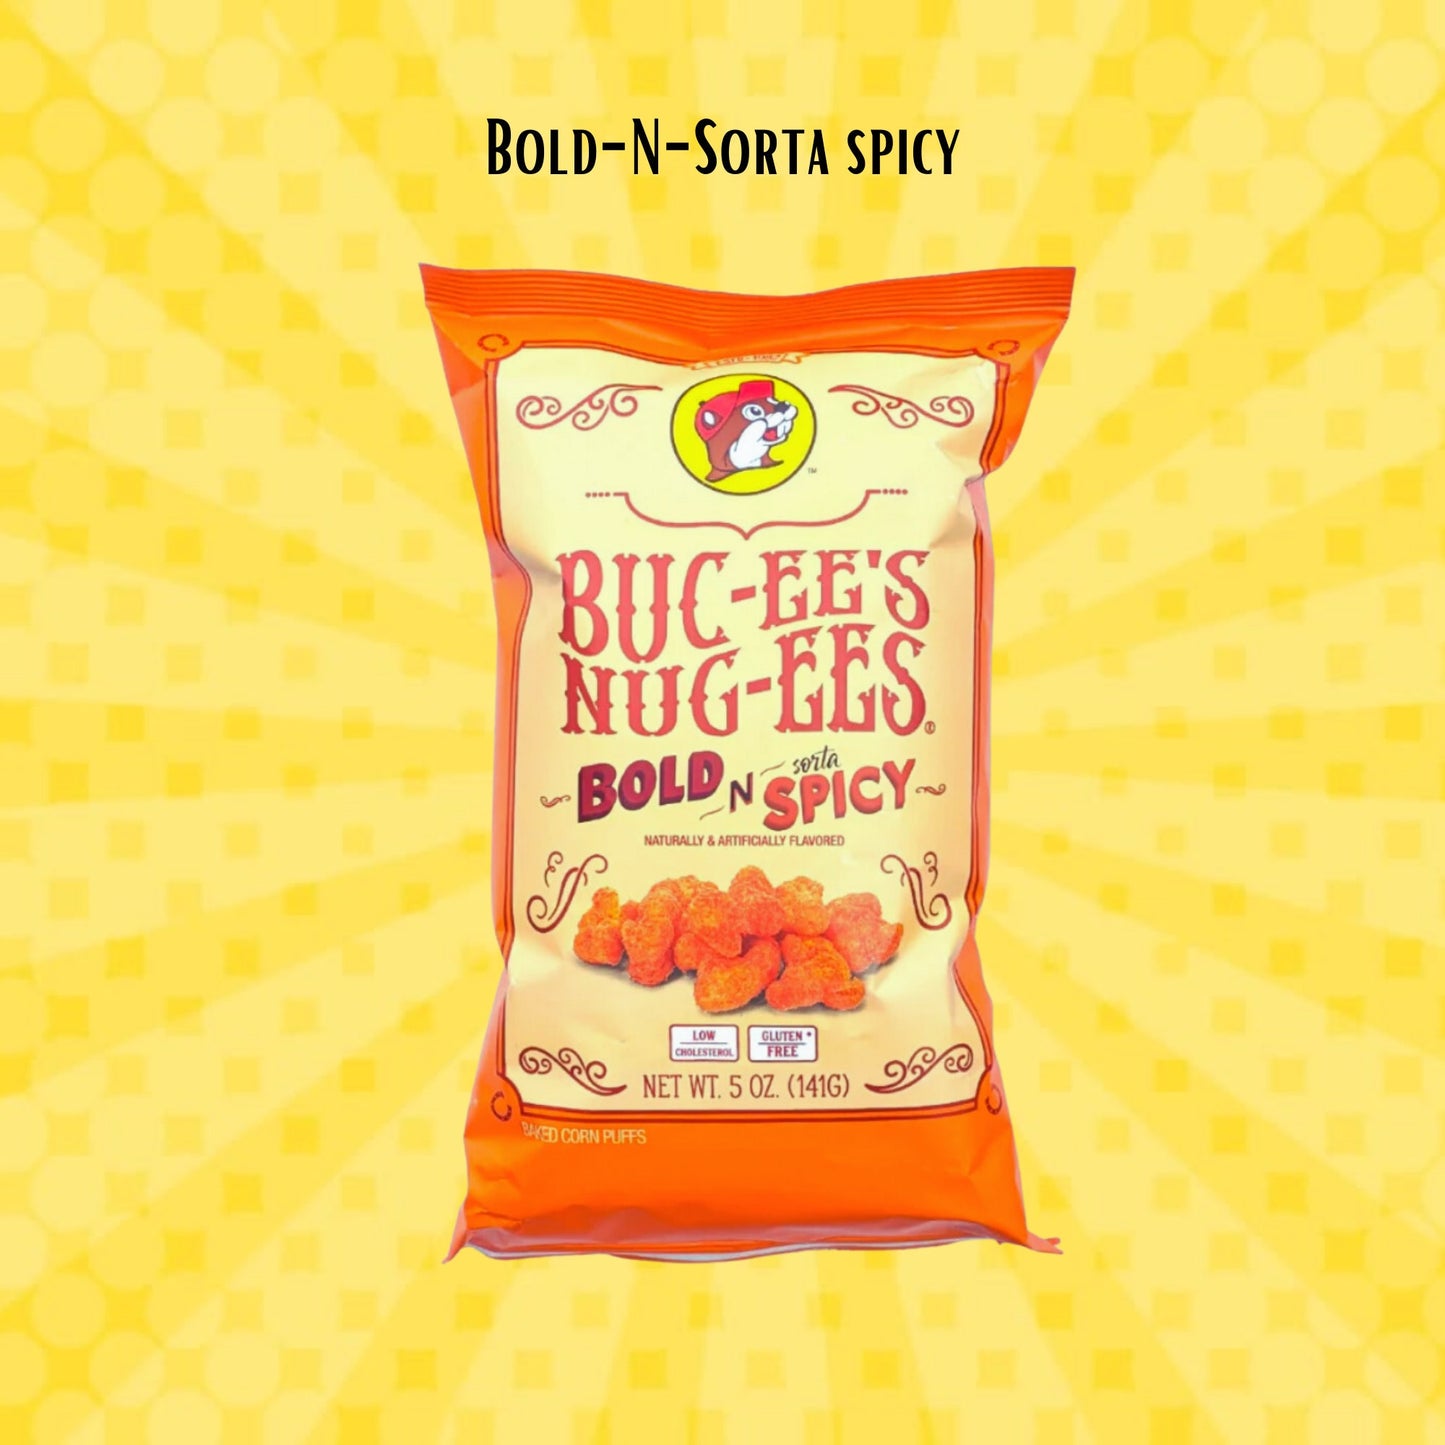 Buc-ee's Bold-N-Sorta Spicy Nug-ees - (Front of Bag)